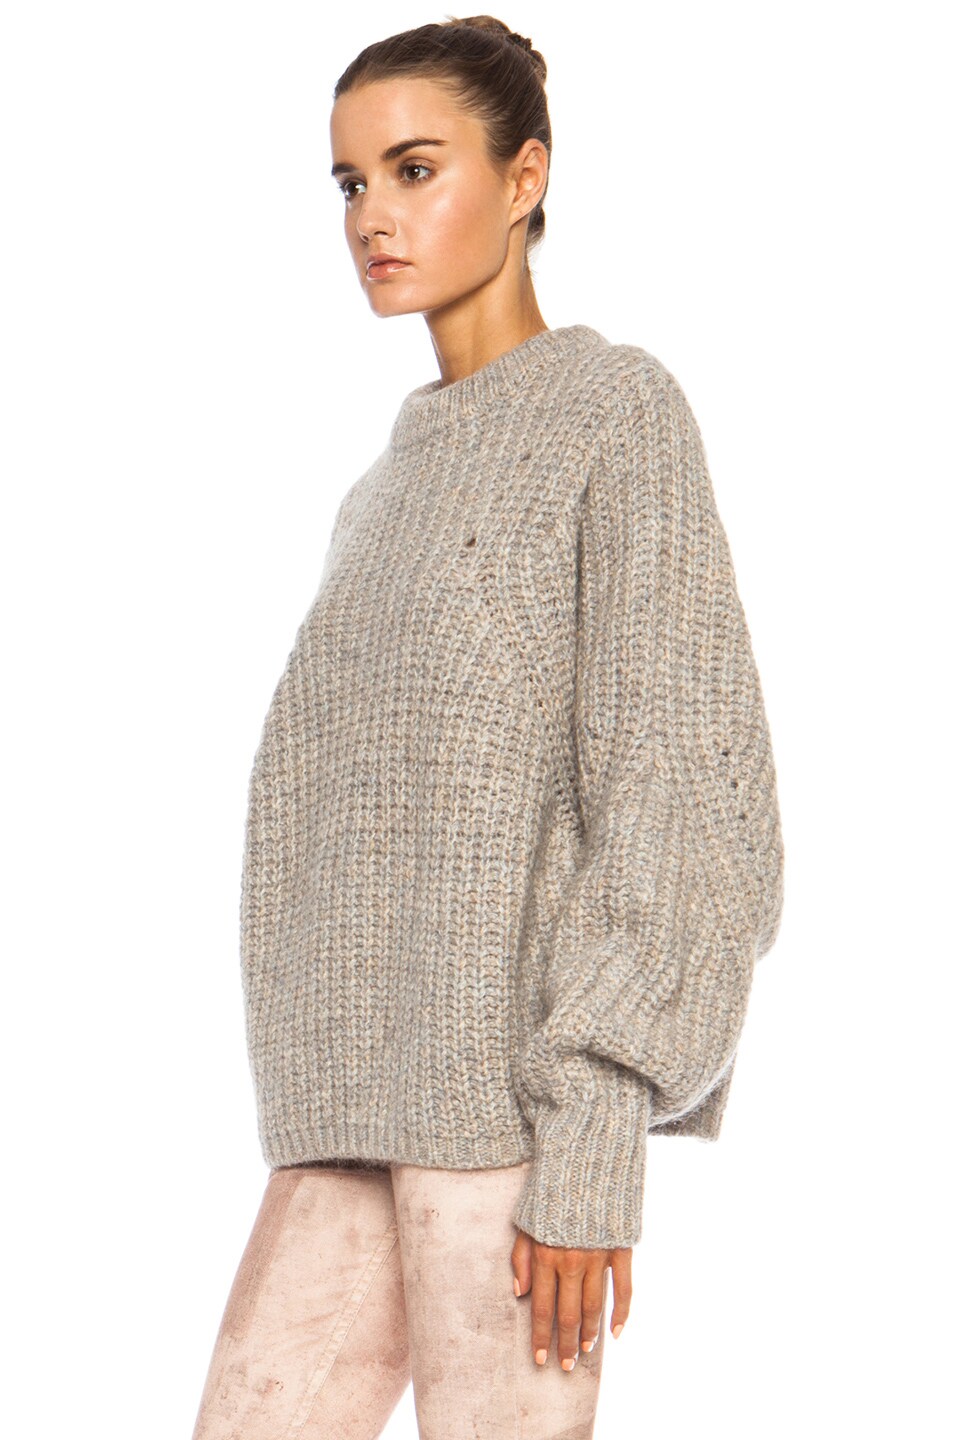 Isabel Marant Newt Mohair-Blend Sweater in Beige | FWRD